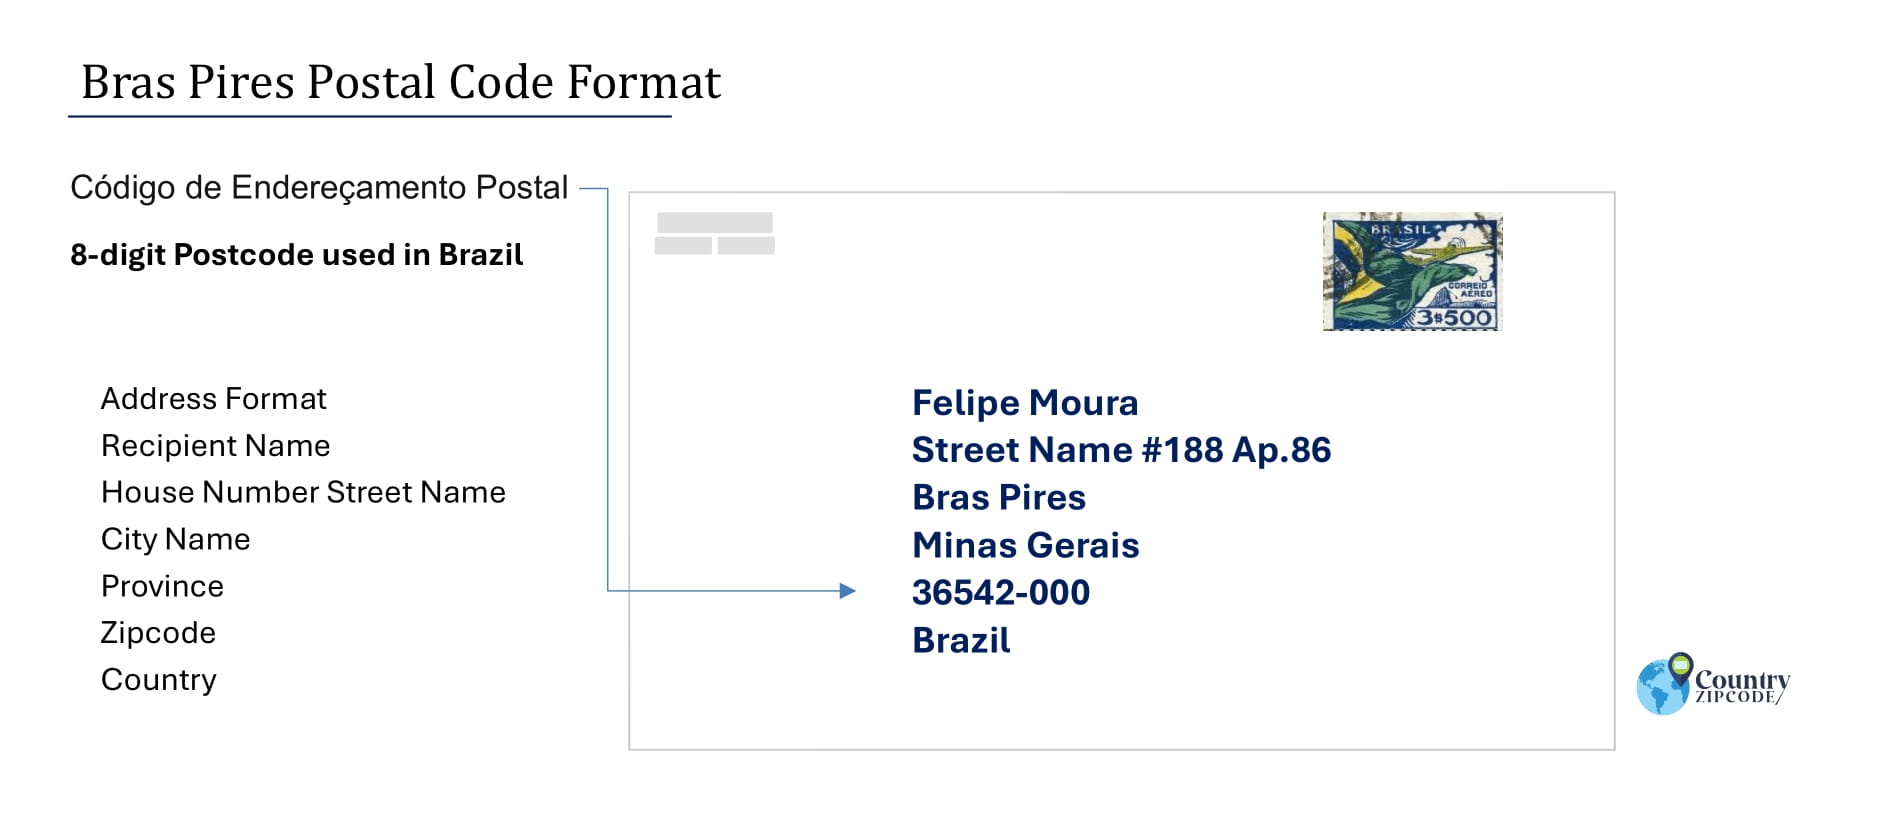 Example of Codigo de Enderecamento Postal and Address format of Bras Pires Brazil